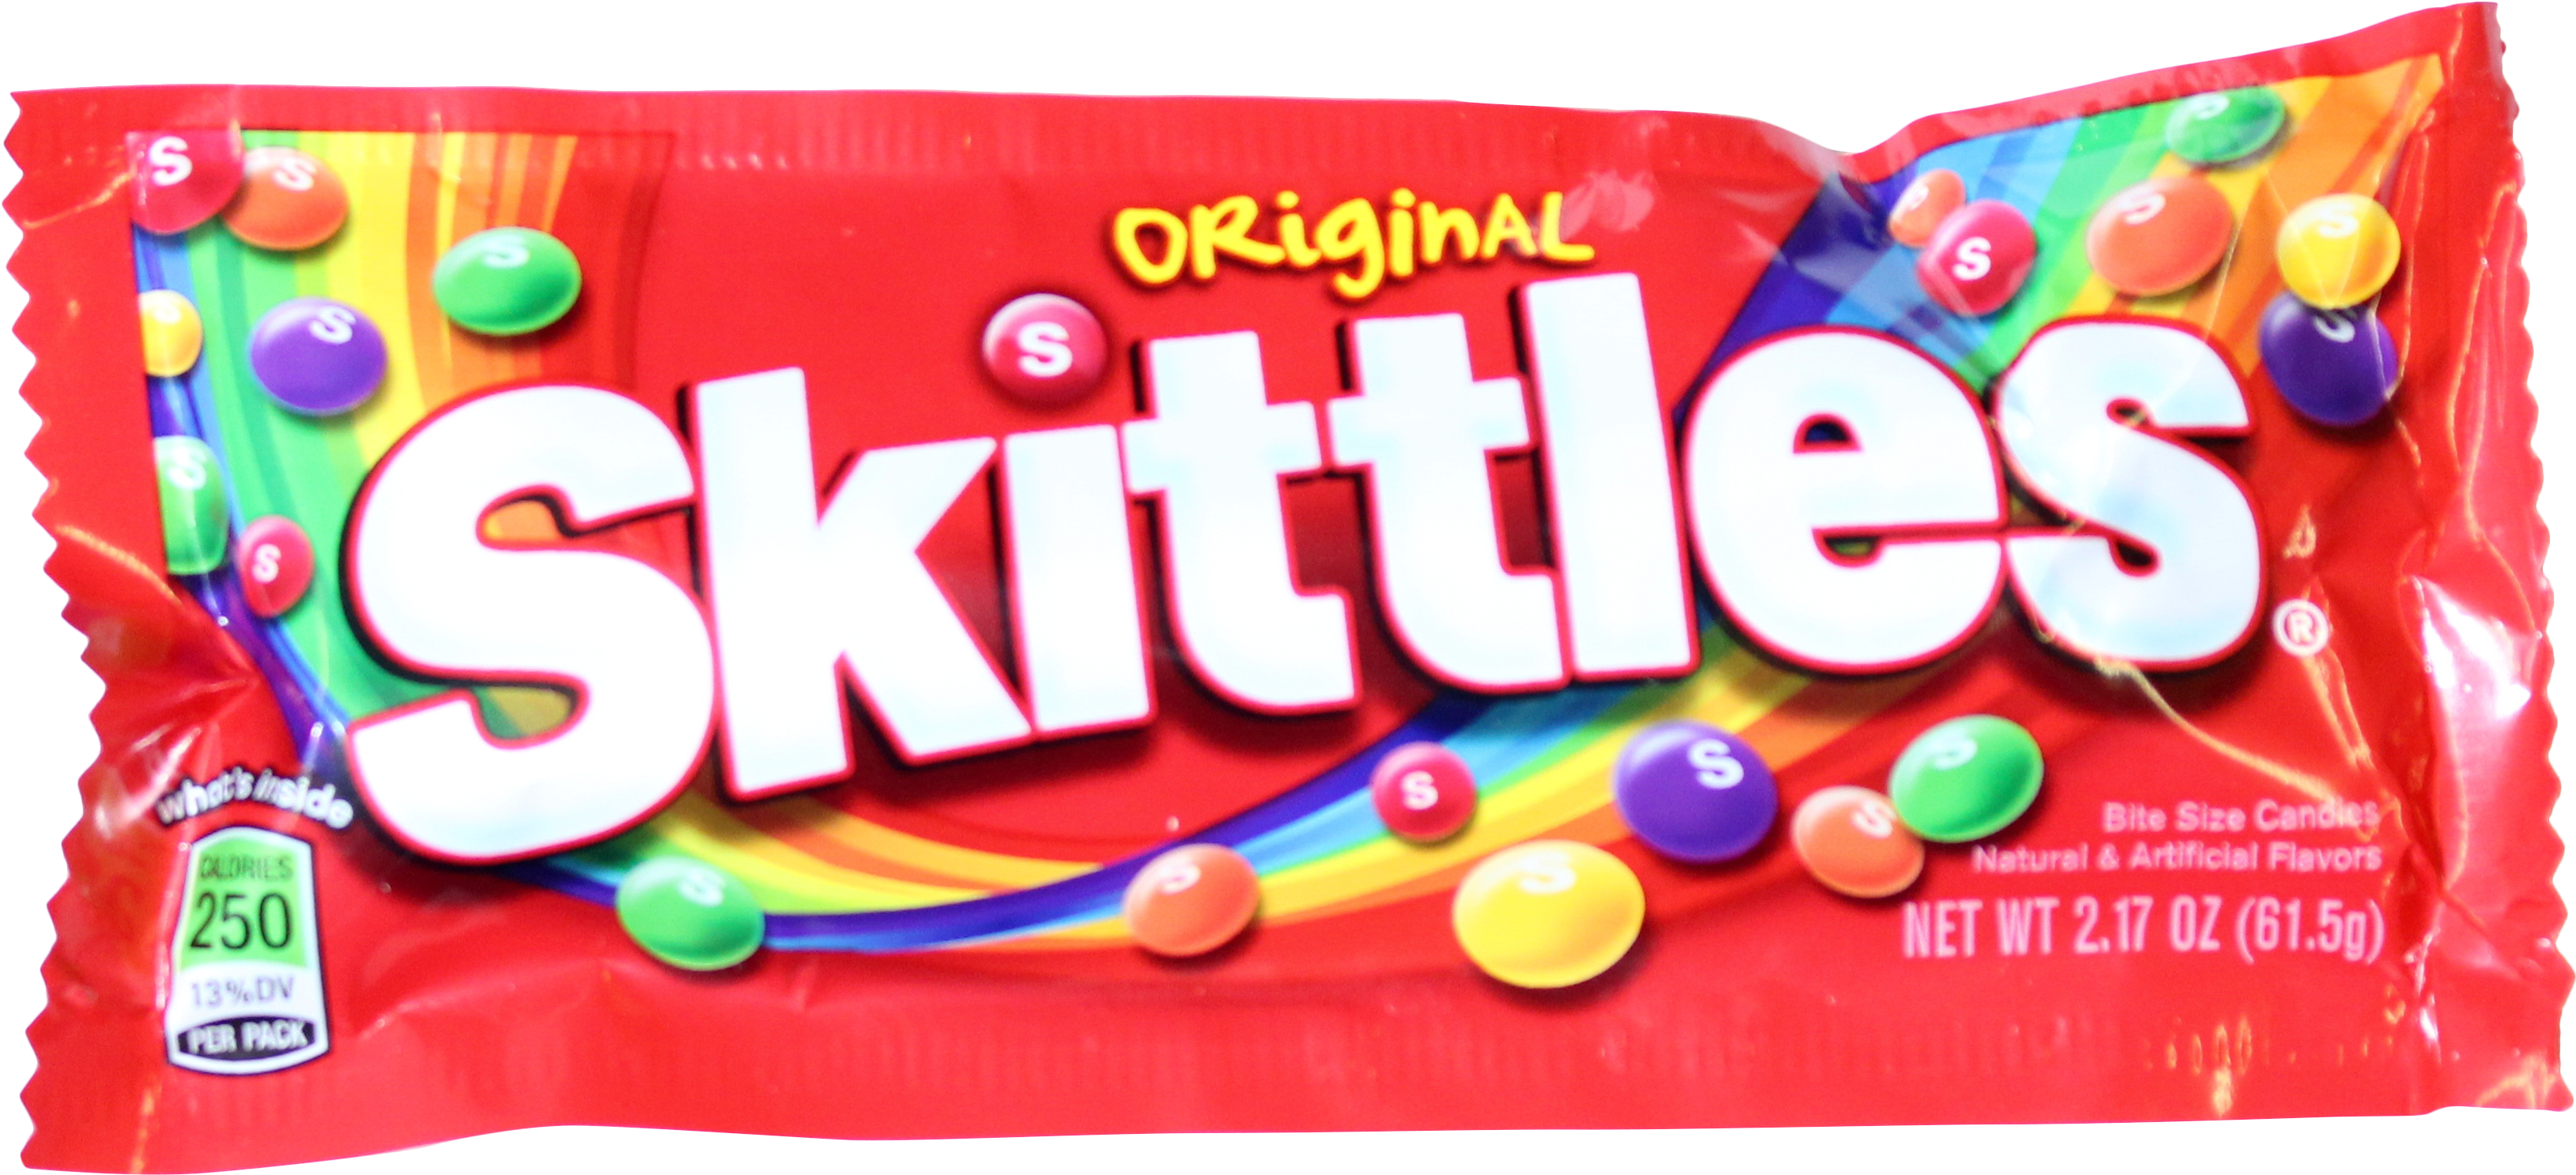 Skittles Transparent Name Skittles Crazy Cores